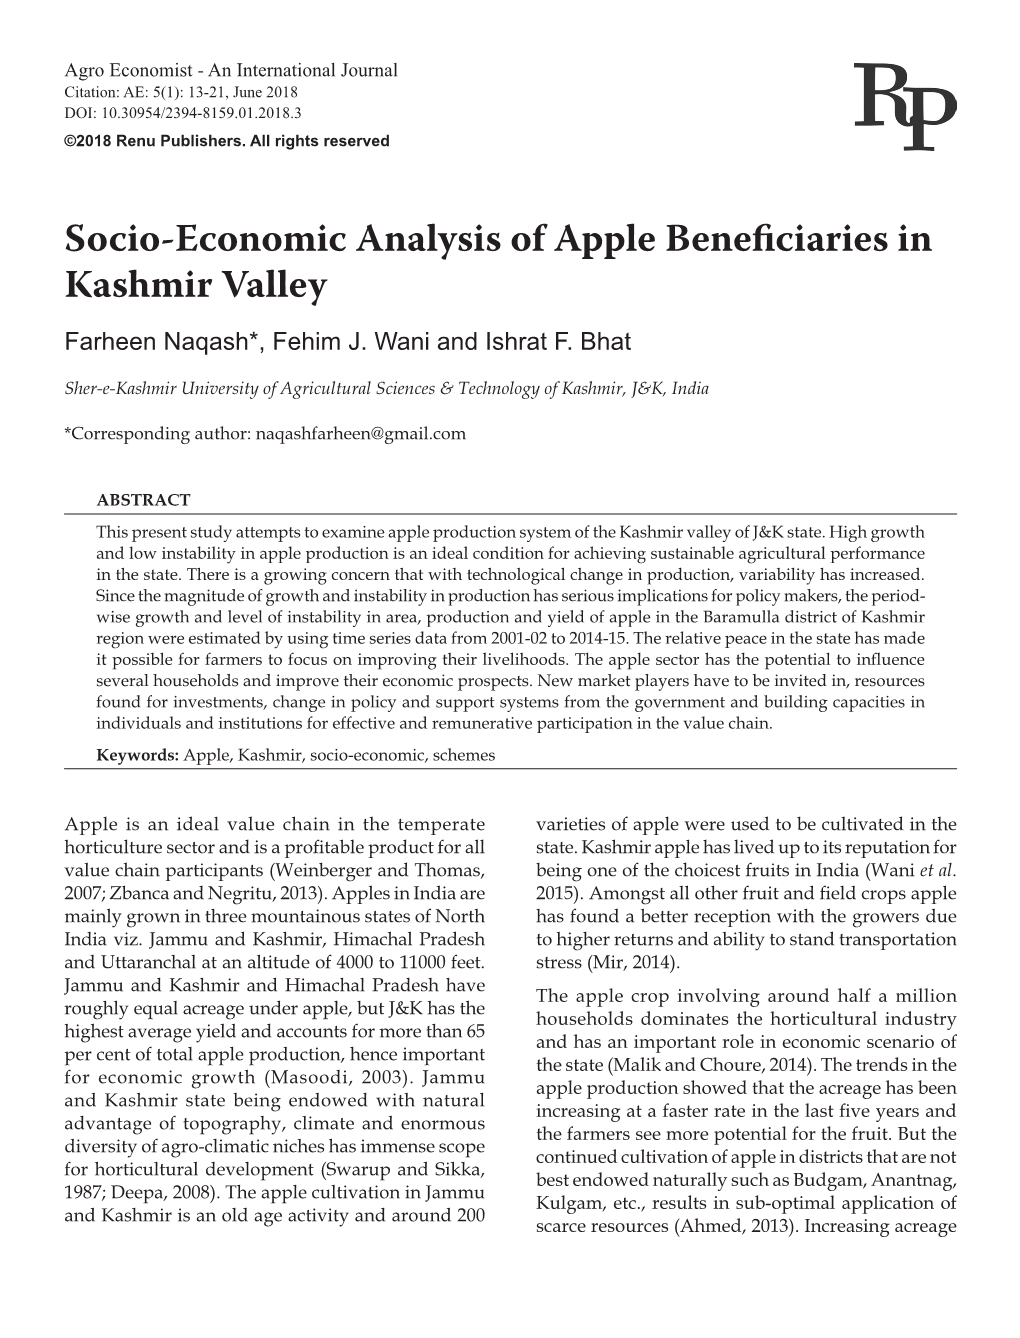 Socio-Economic Analysis of Apple Beneficiaries in Kashmir Valley Farheen Naqash*, Fehim J